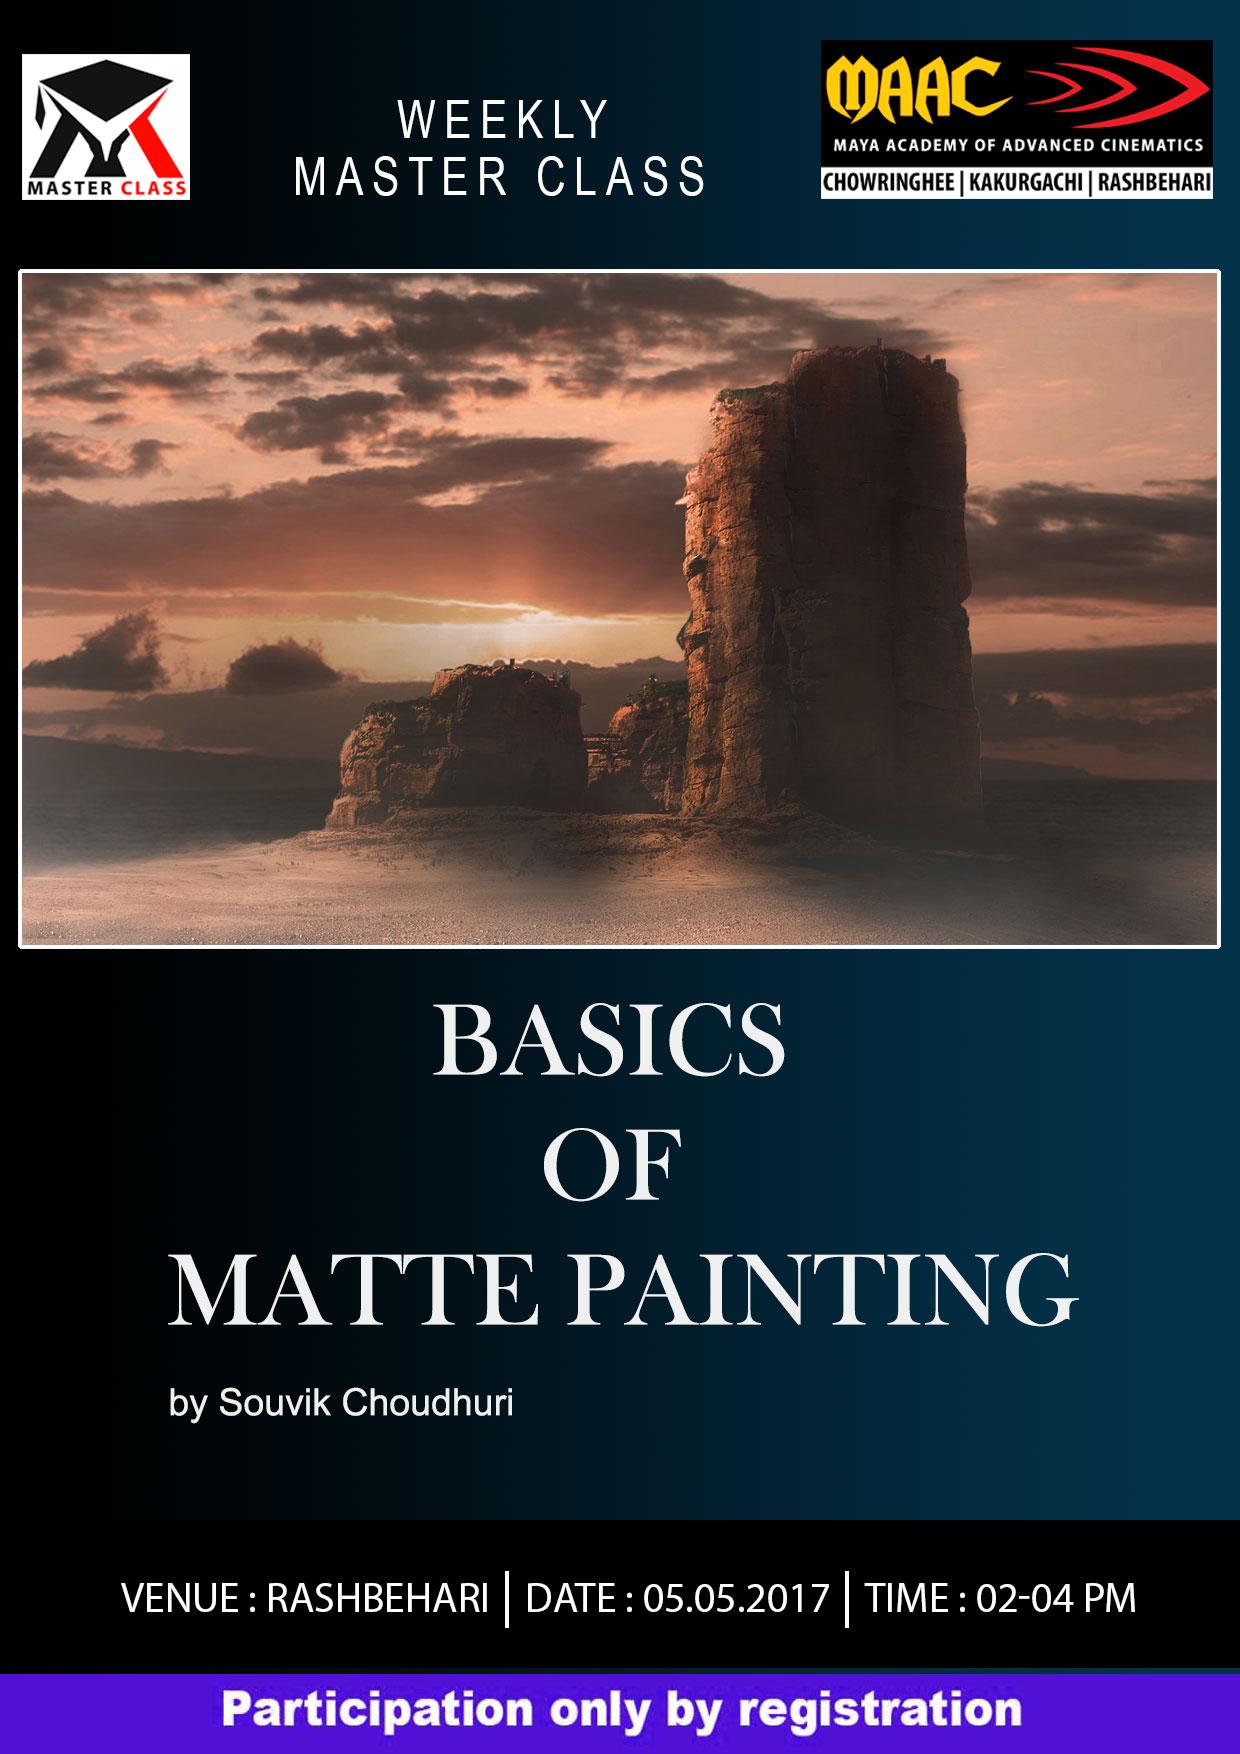 Weekly Master Class on Basic Of Matte Painting - Souvik Choudhuri